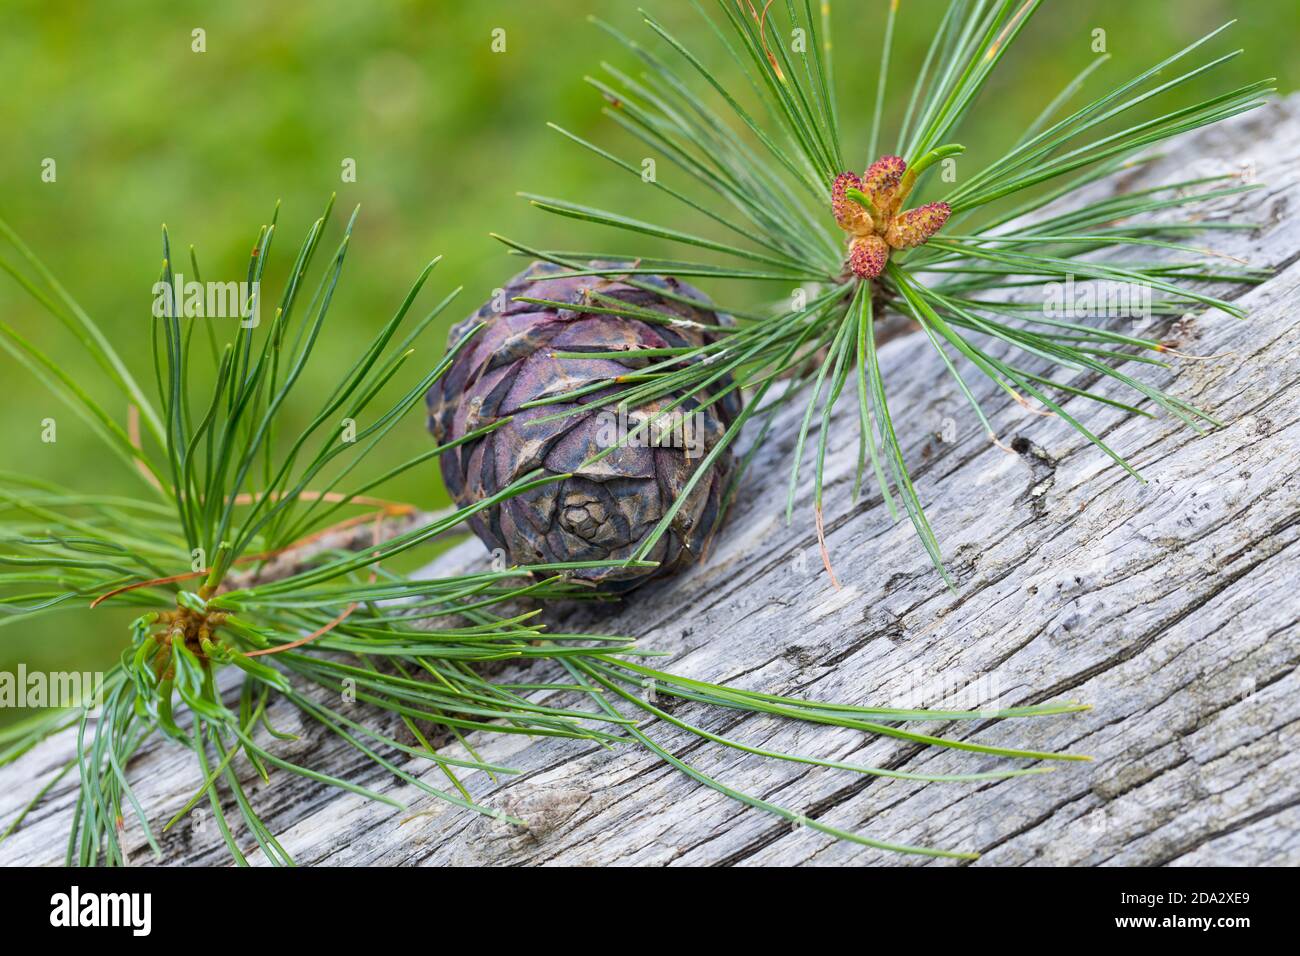 Swiss stone pine, arolla pine (Pinus cembra), needles, mature cones and male flowers, Germany Stock Photo